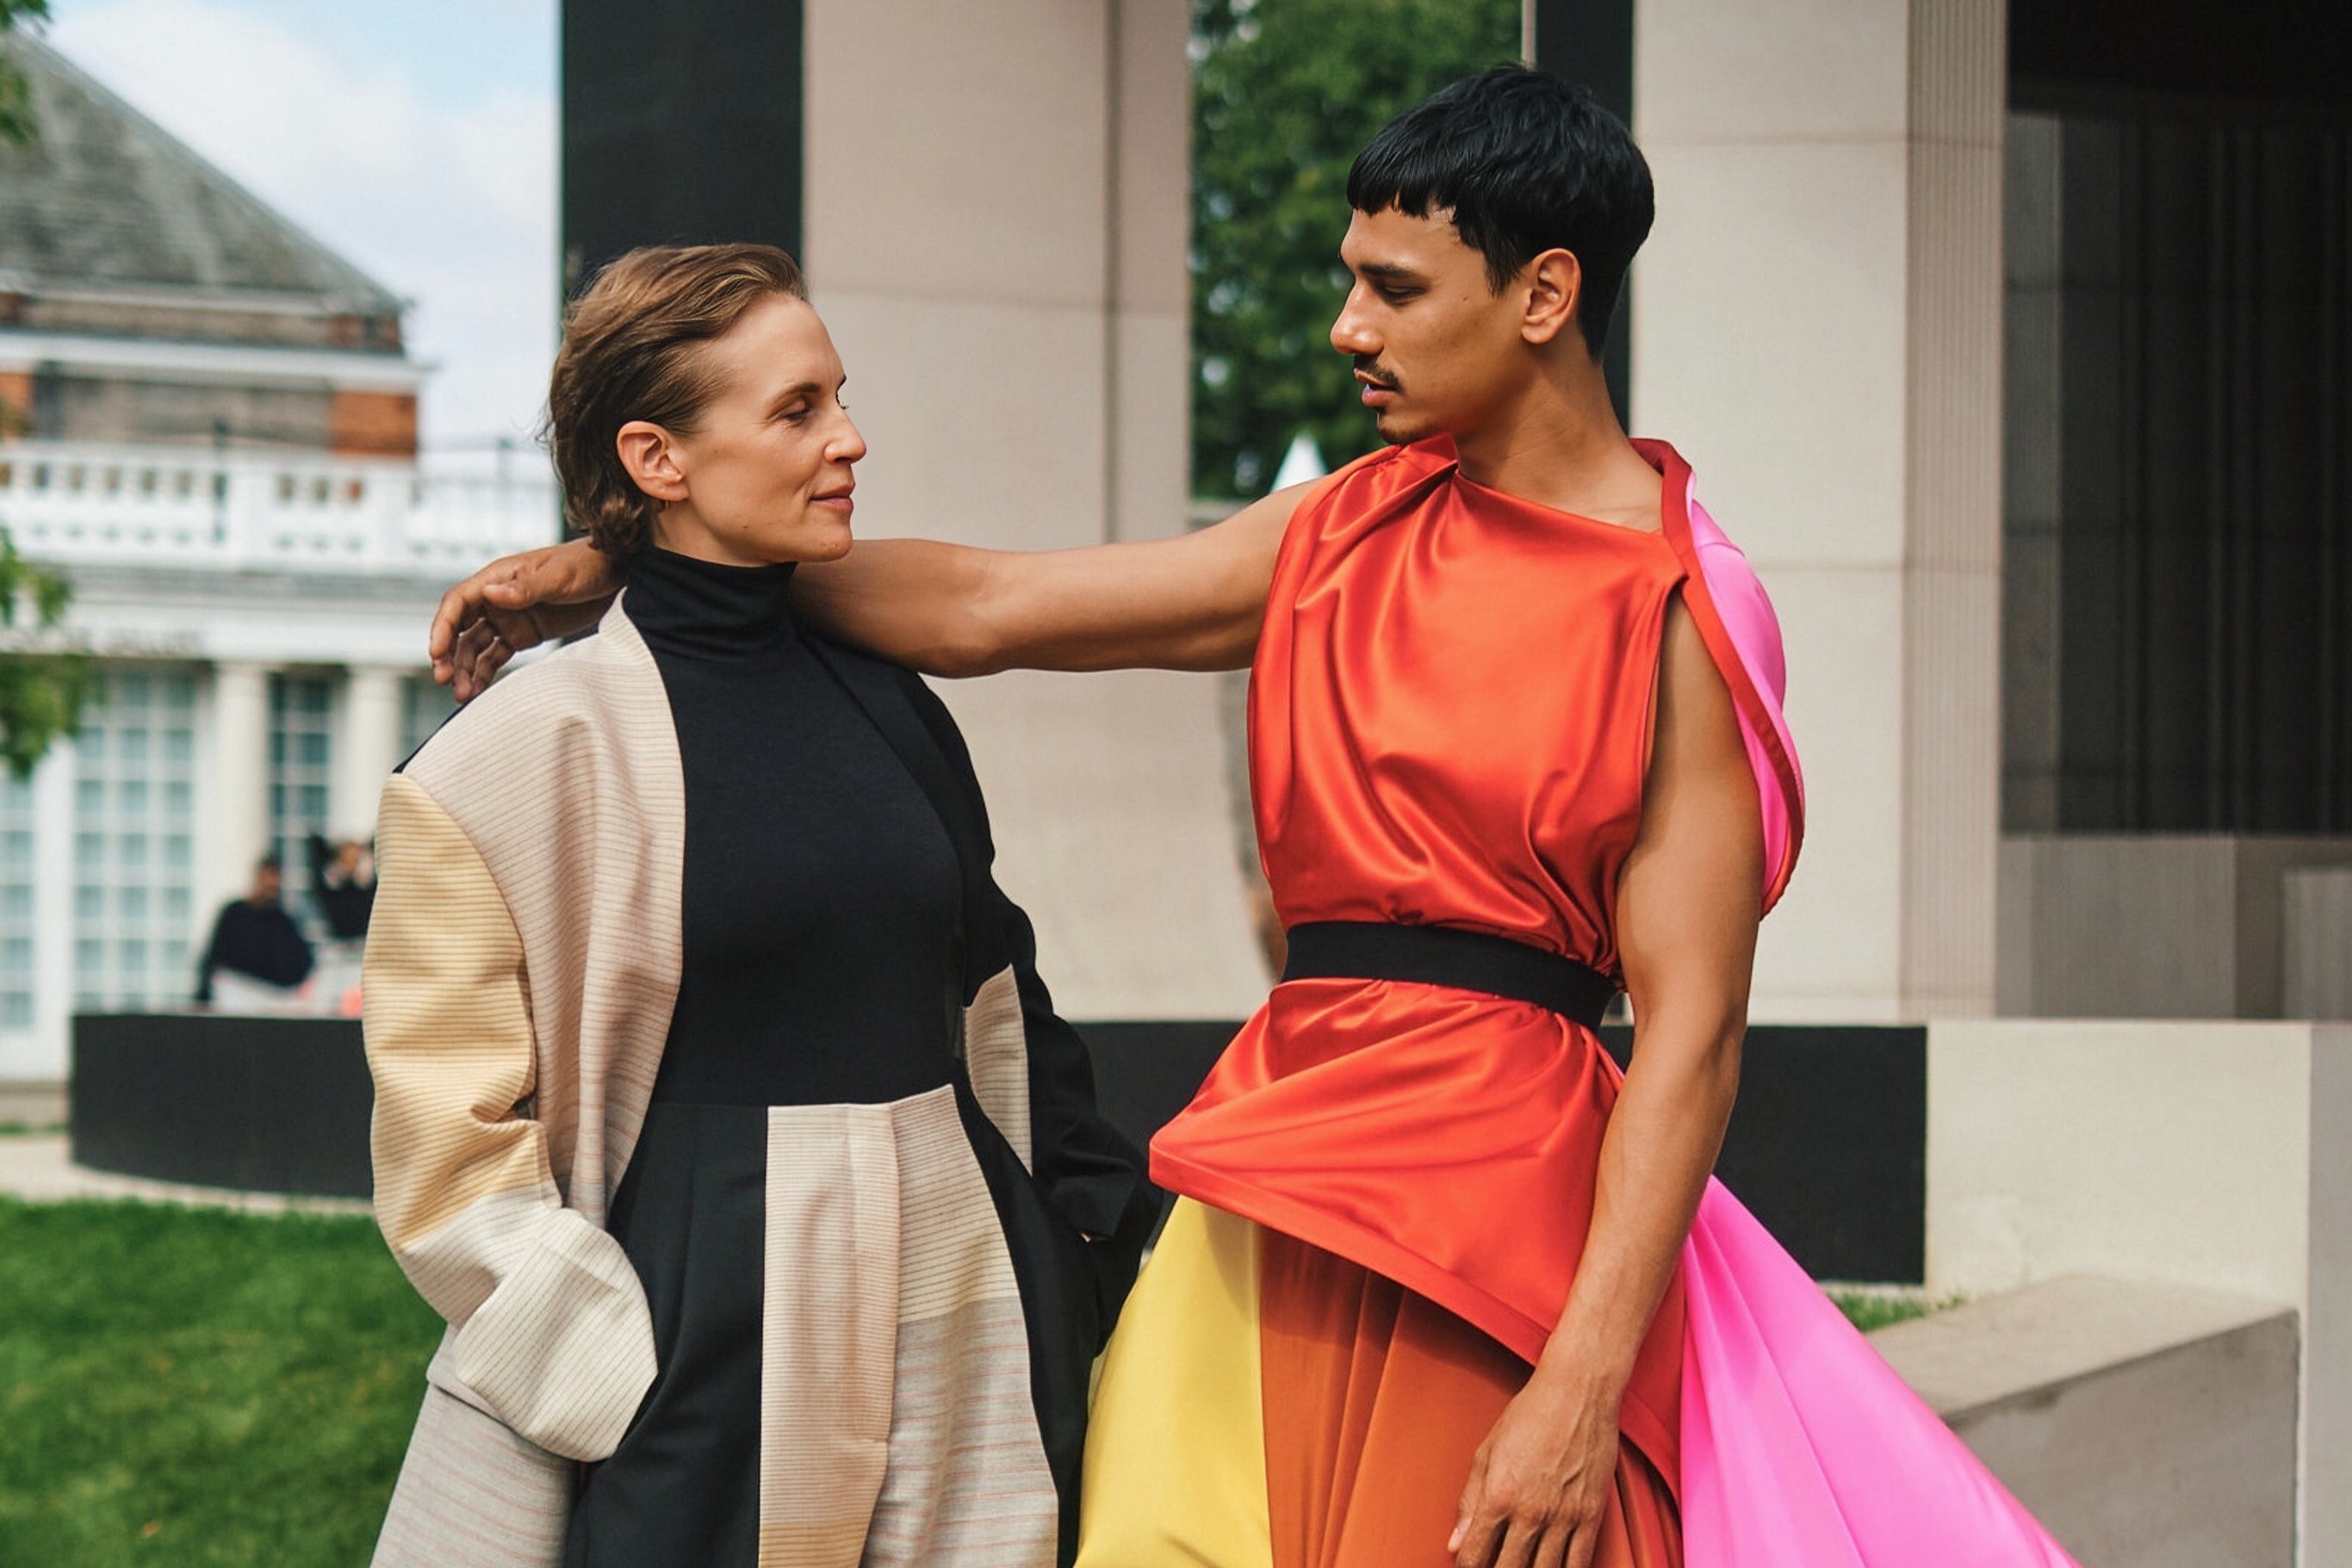 Unisex: When gender is no longer barrier in fashion